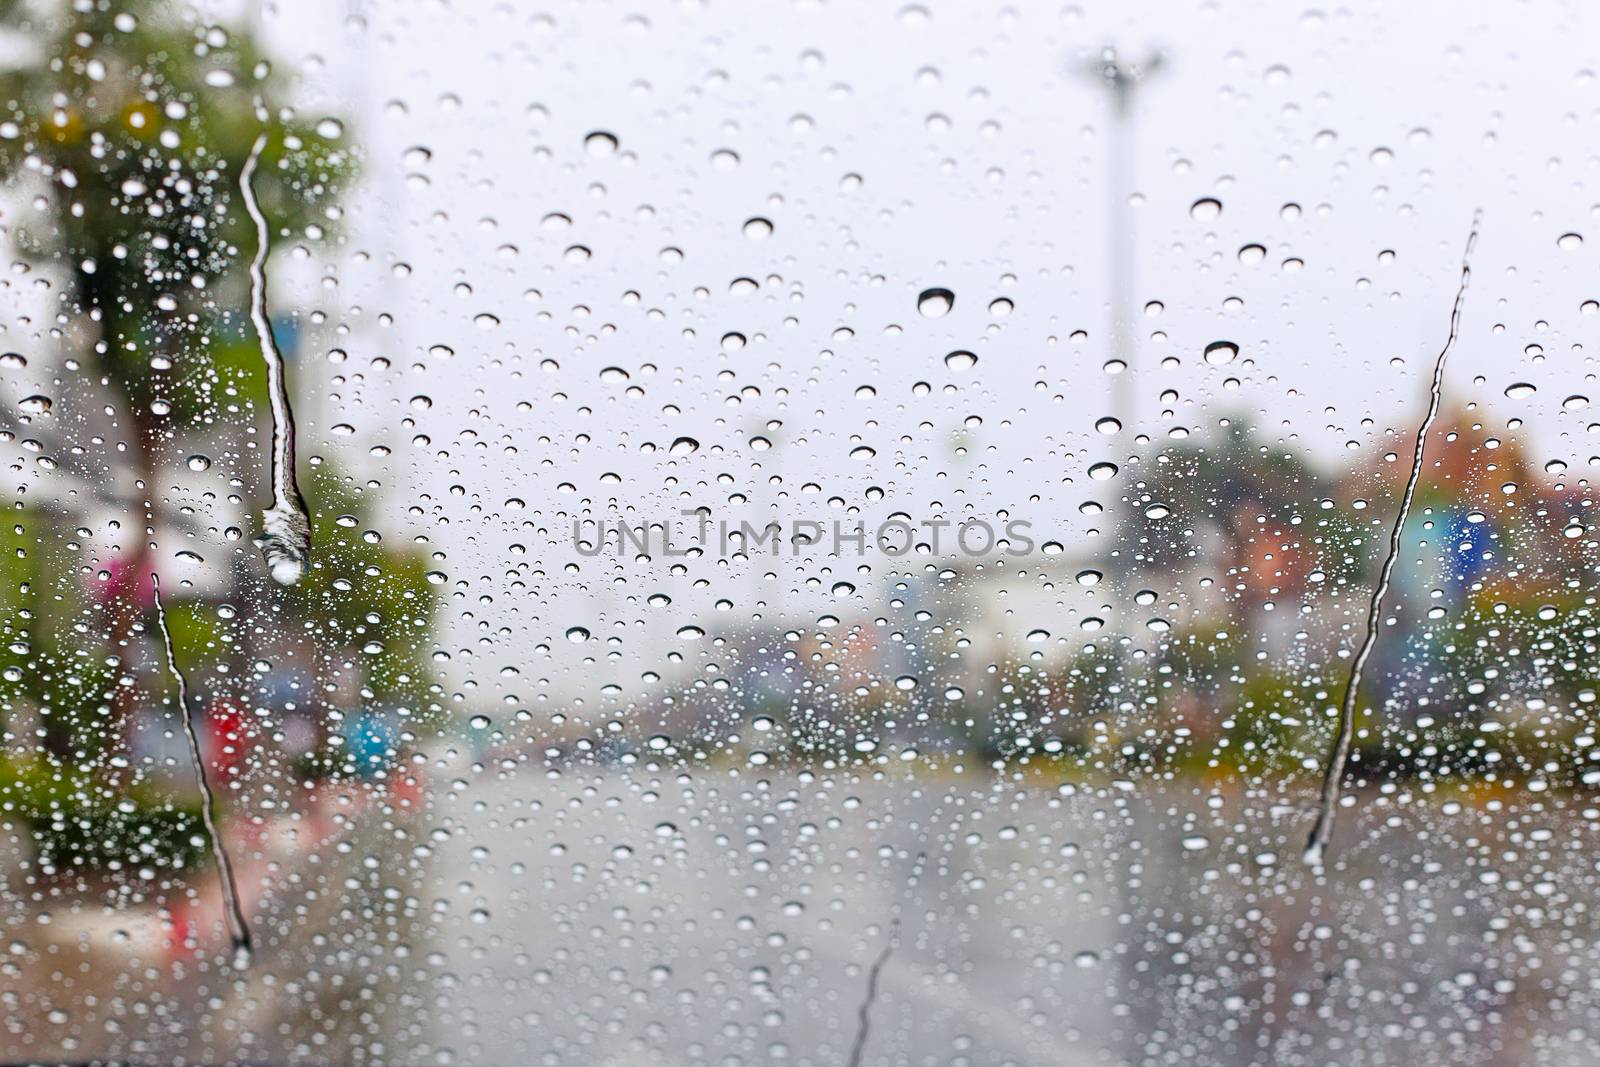 Windshield rain drop on car window.